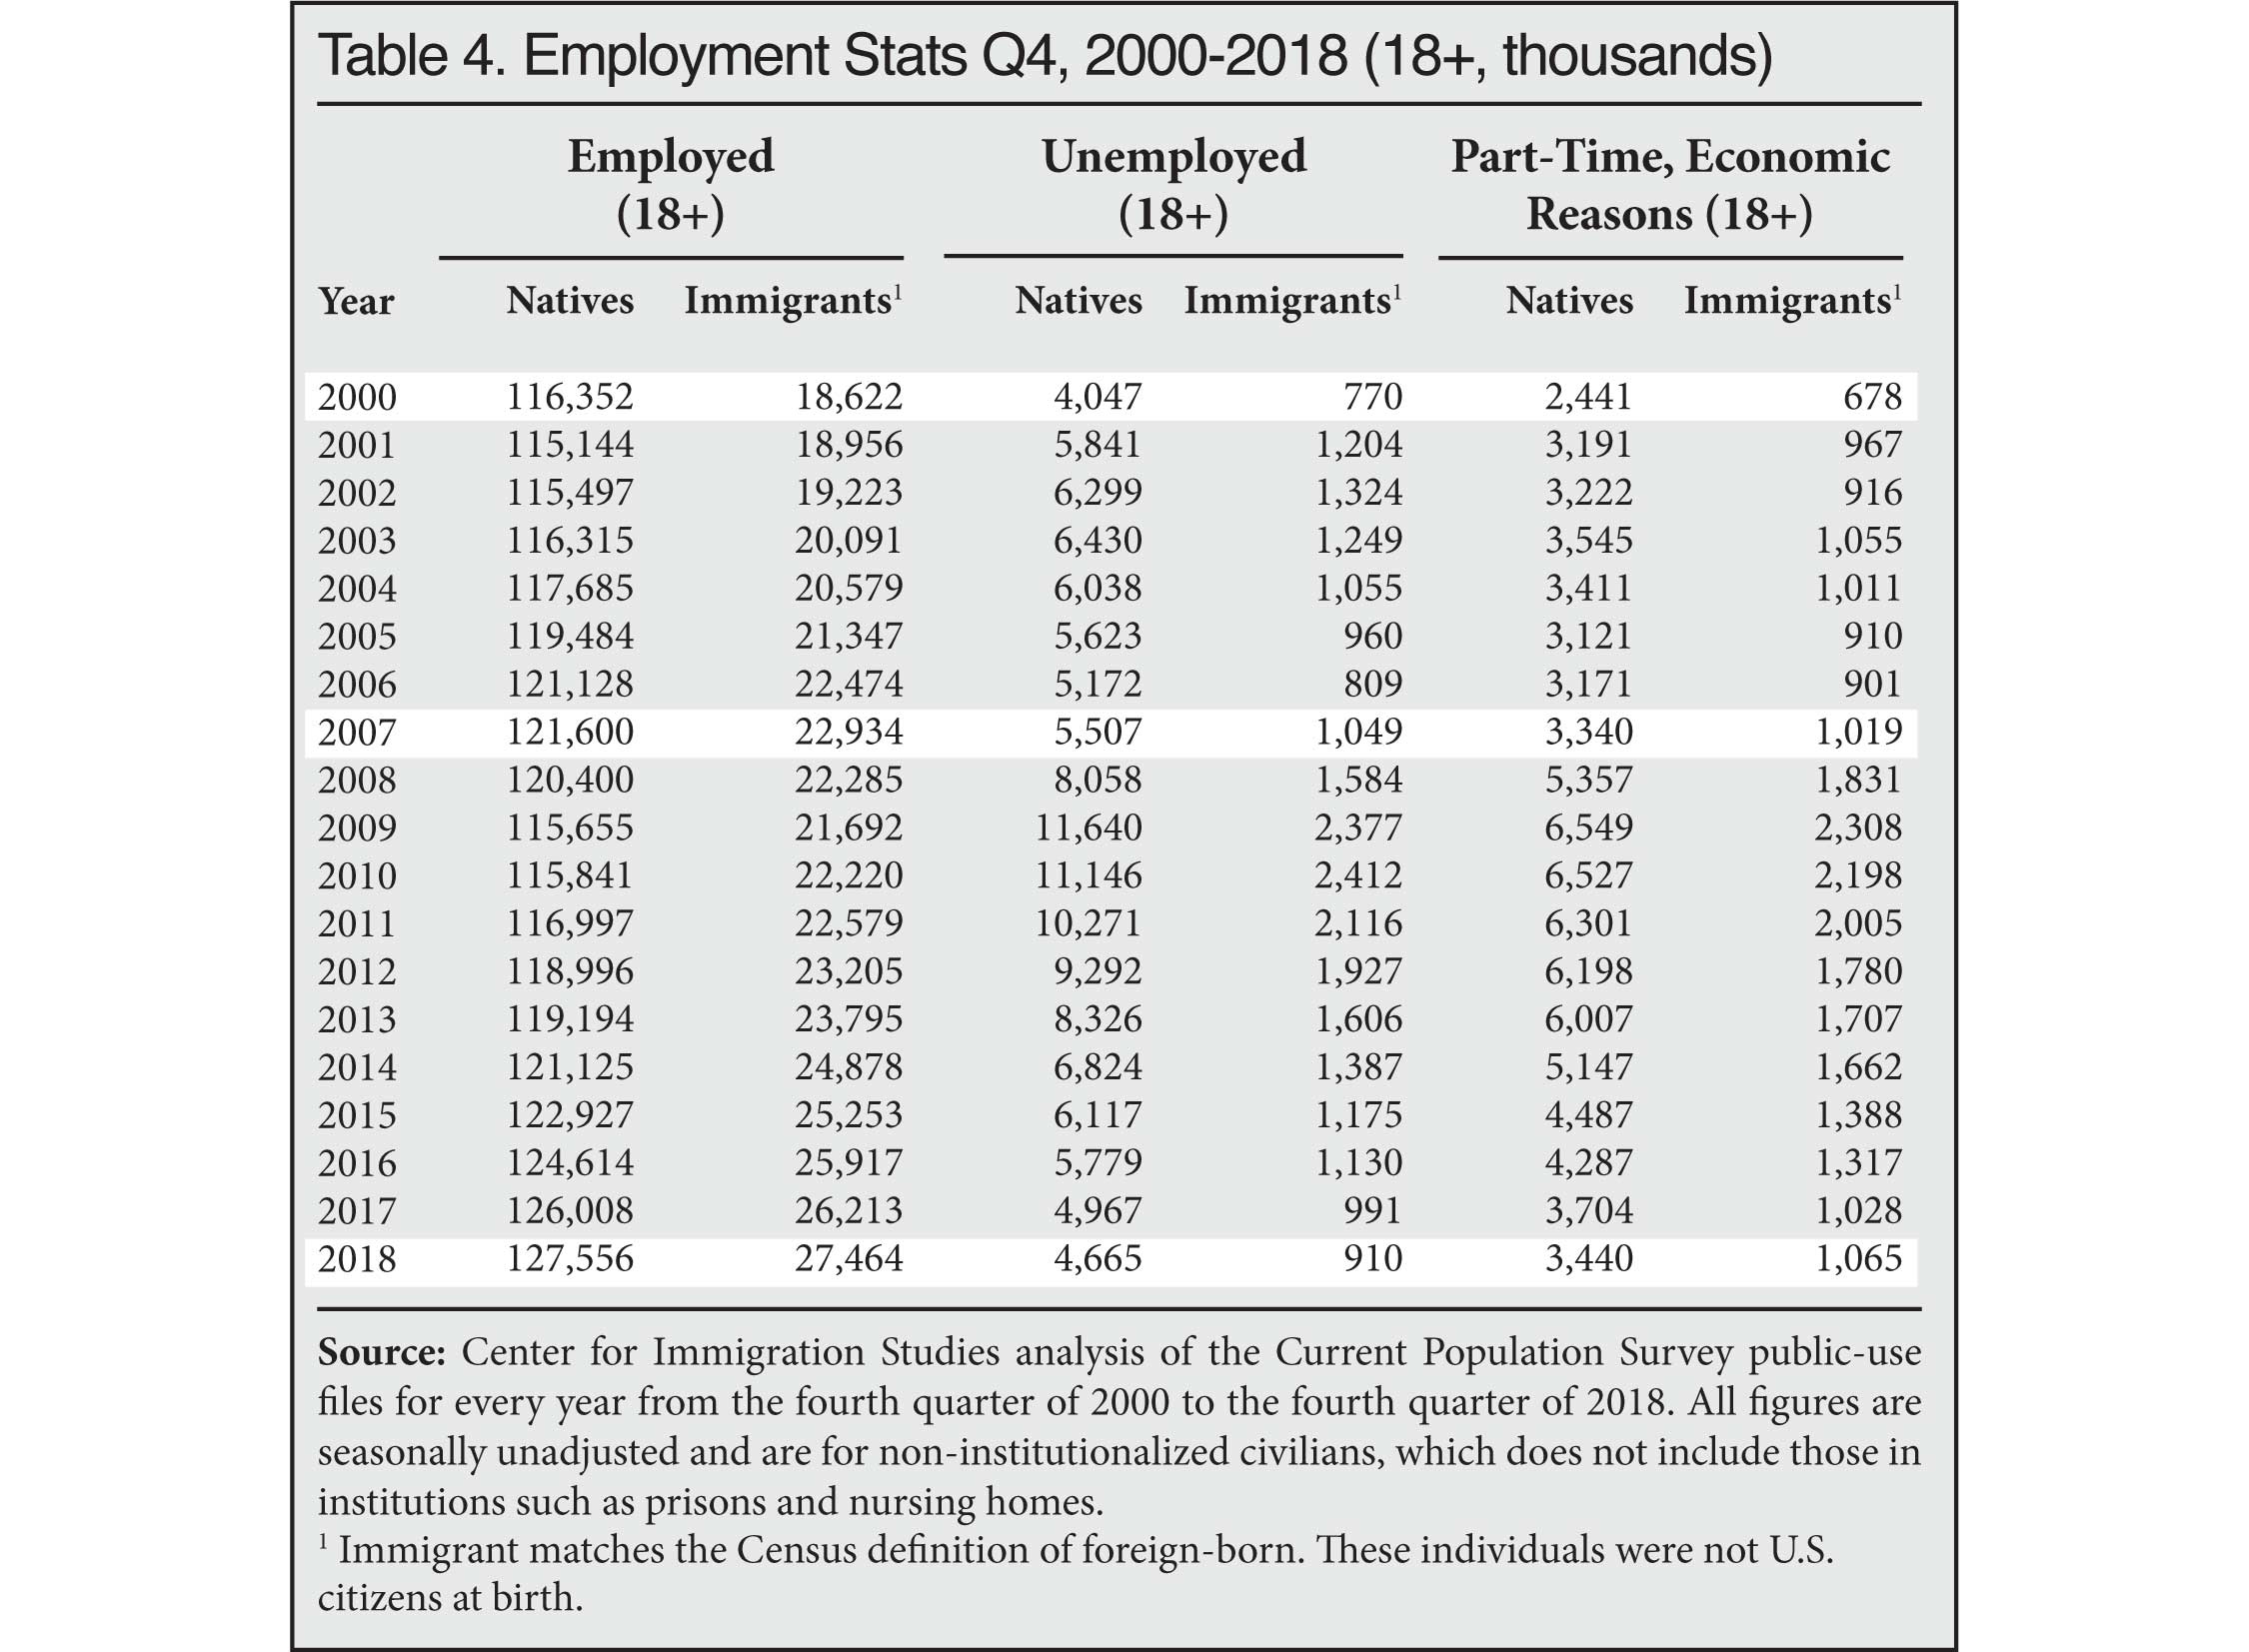 Table: Employment Statistics Q4, 2000-2018